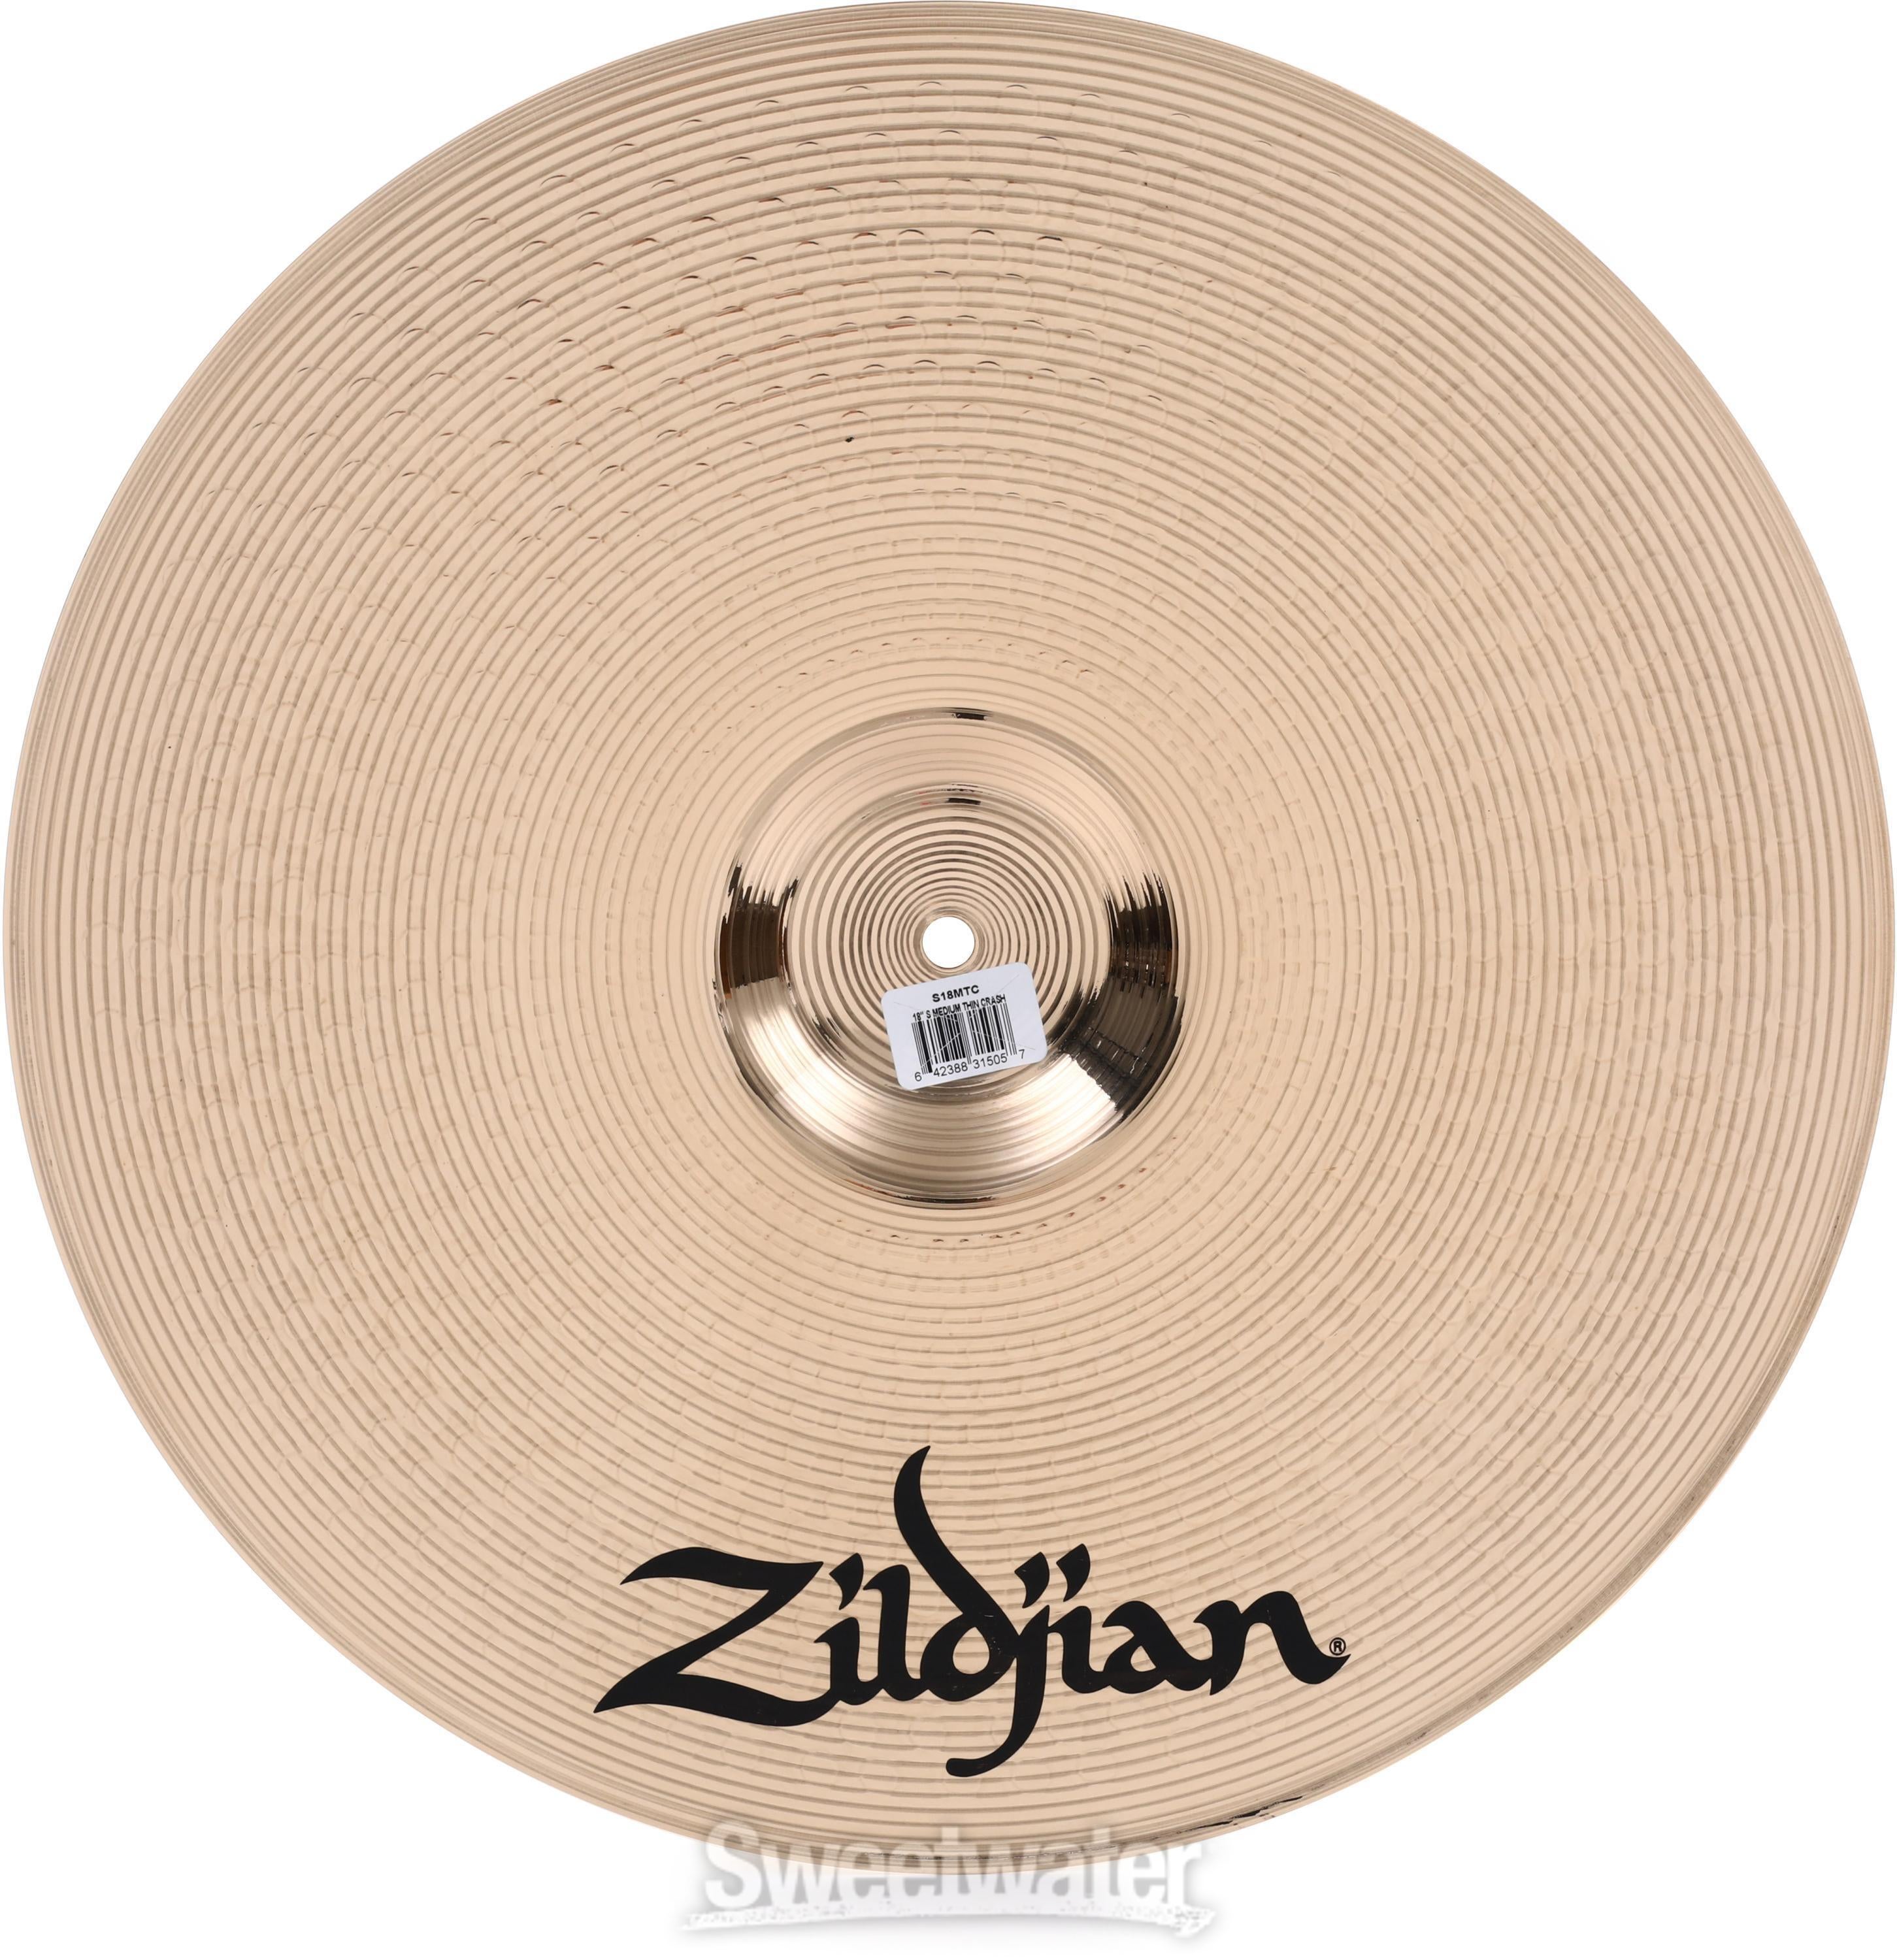 Zildjian 18 inch S Series Medium Thin Crash Cymbal | Sweetwater